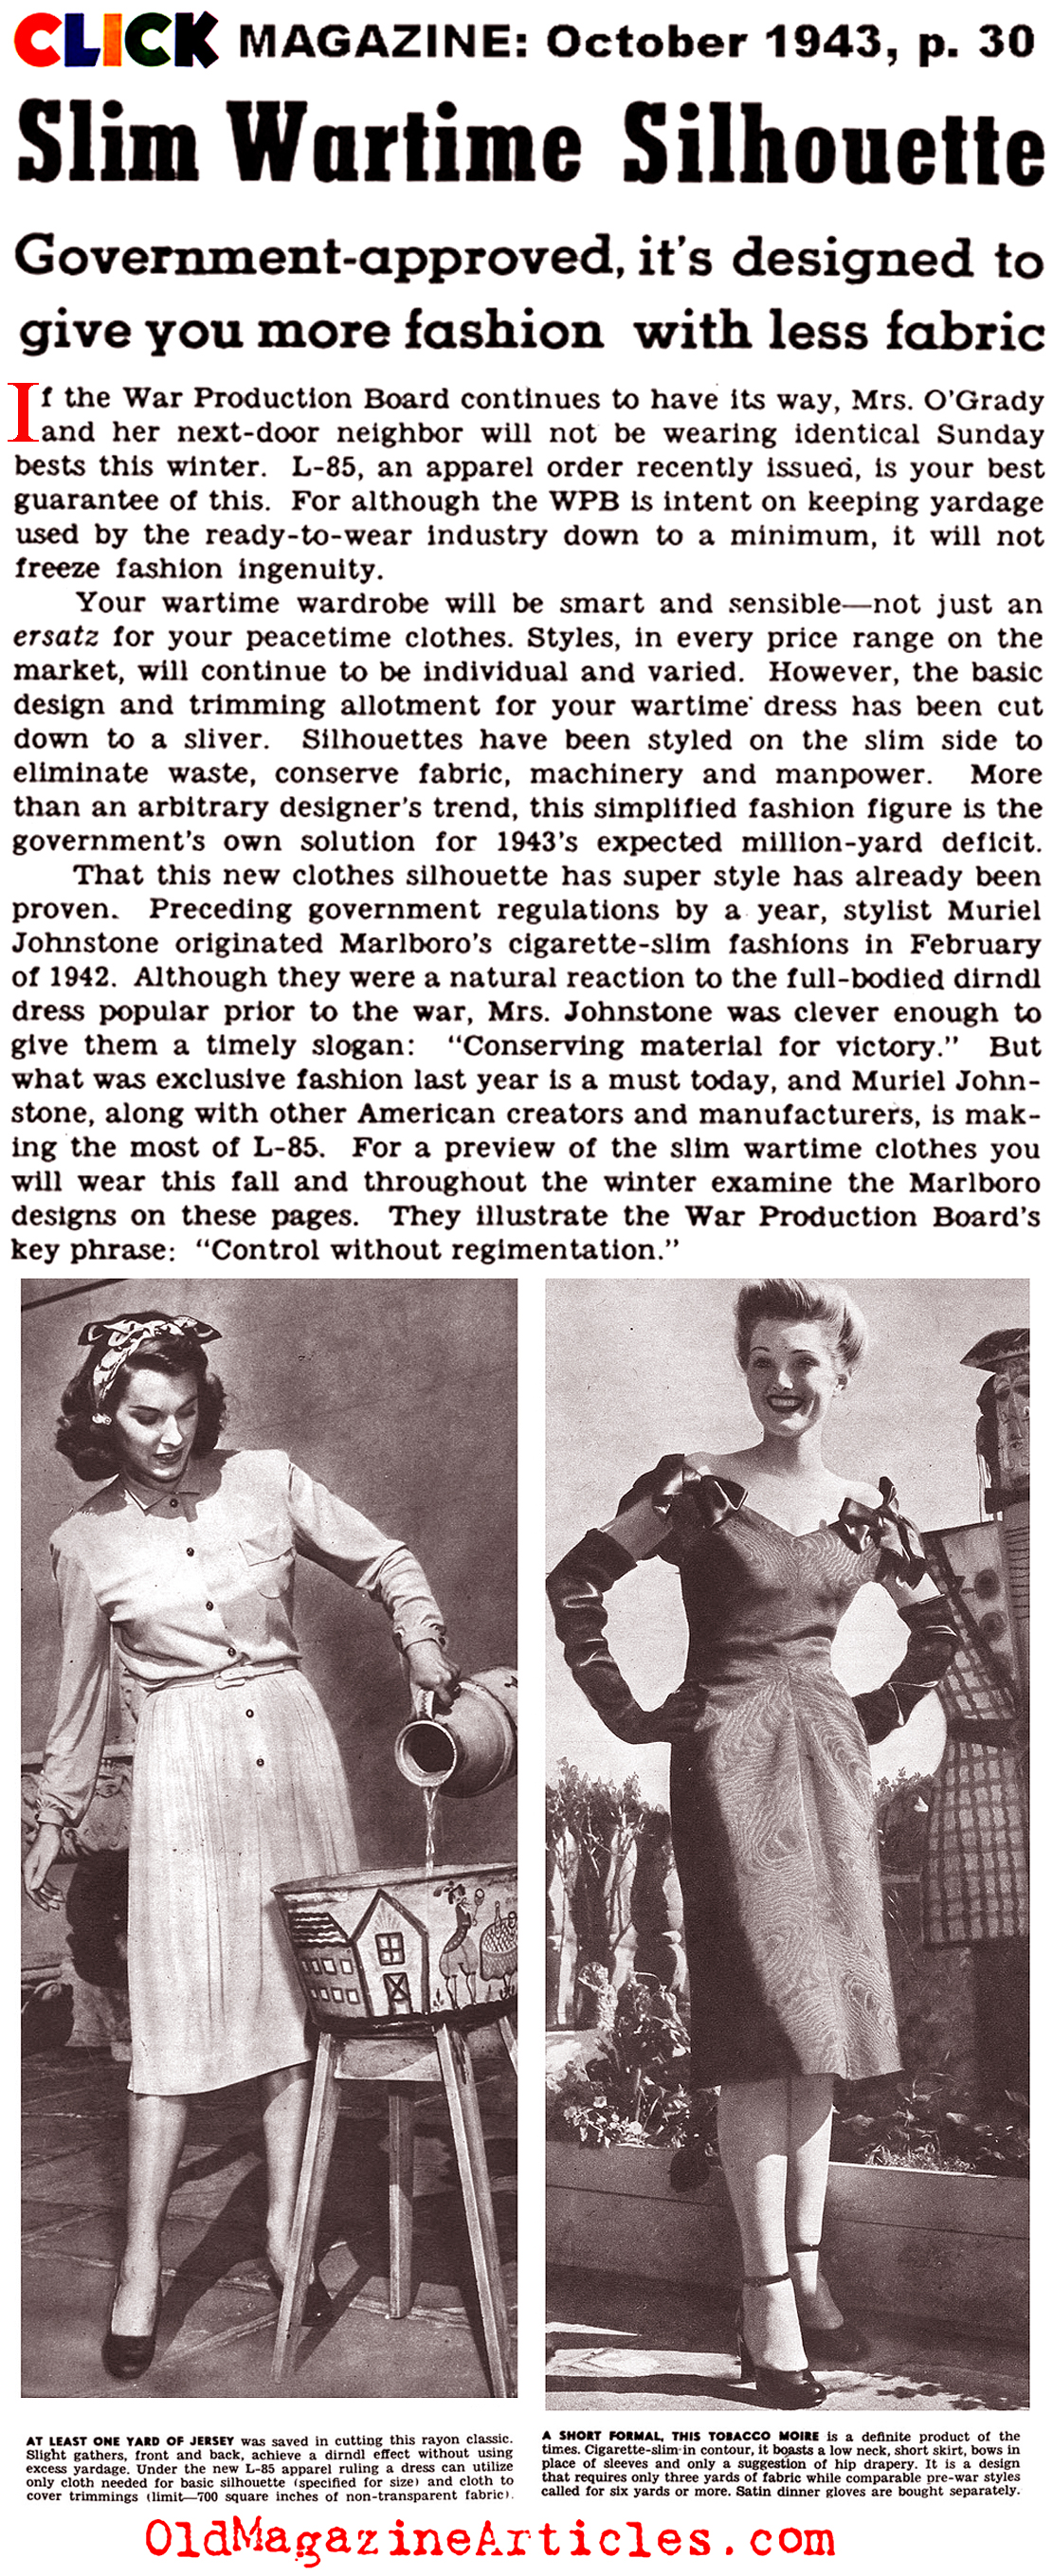 That Slim Wartime Silhouette (Click Magazine, 1943)